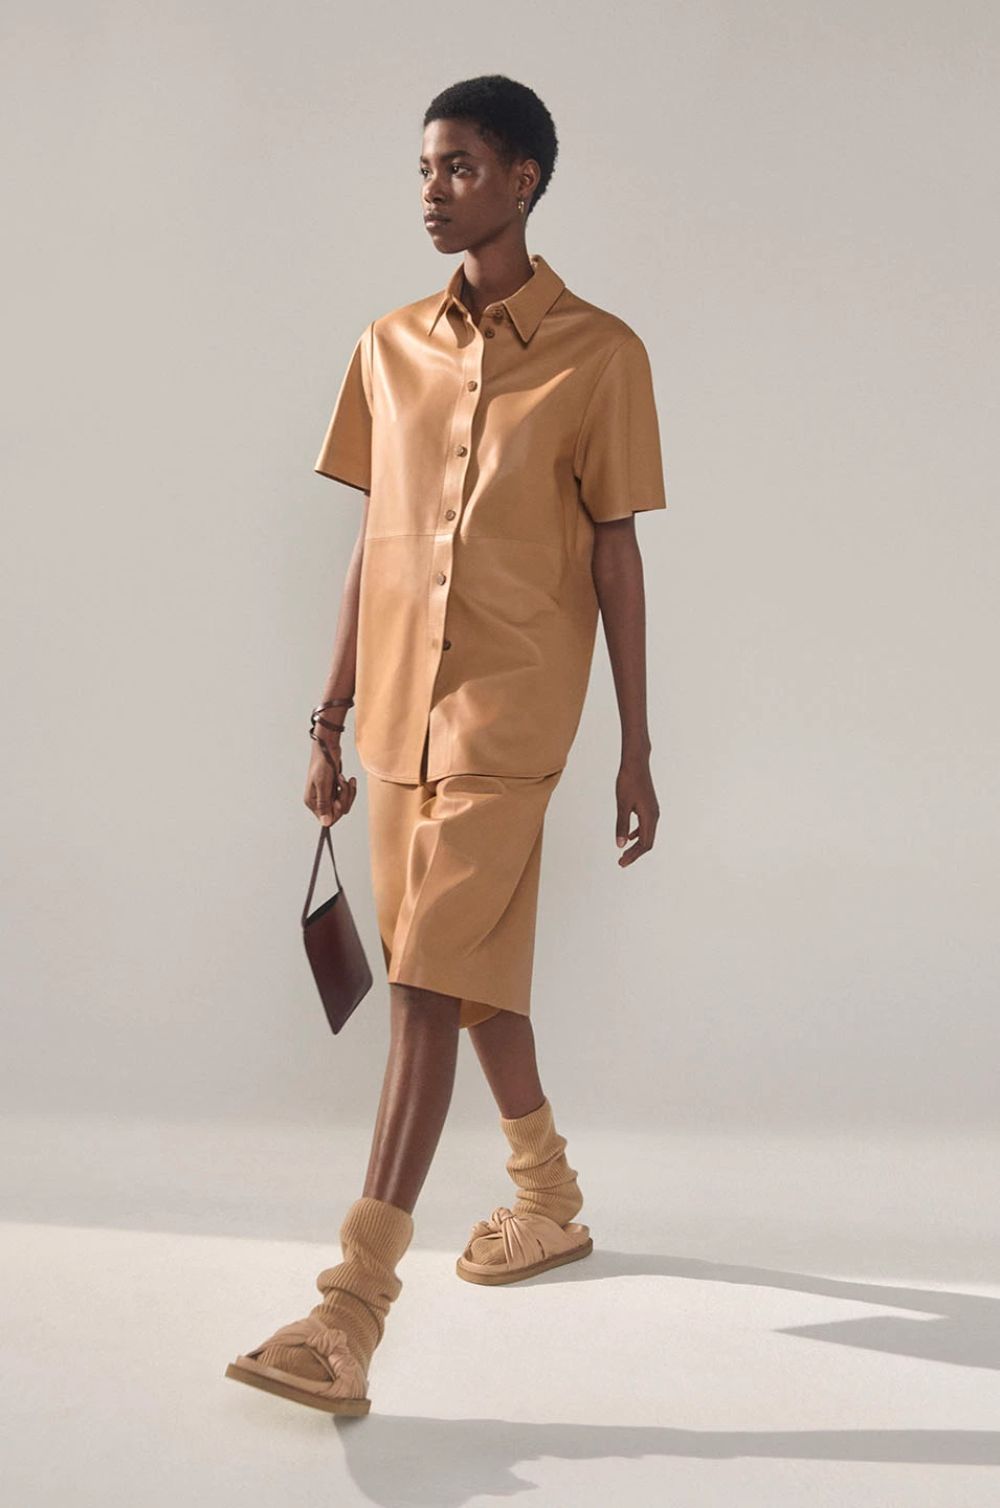 Joseph Spring-Summer Lookbook Nappa Leather Bruni Shirt / Nappa Leather Tarah Shorts / Leather Pocket Bag / Leather Big Knot Sandals